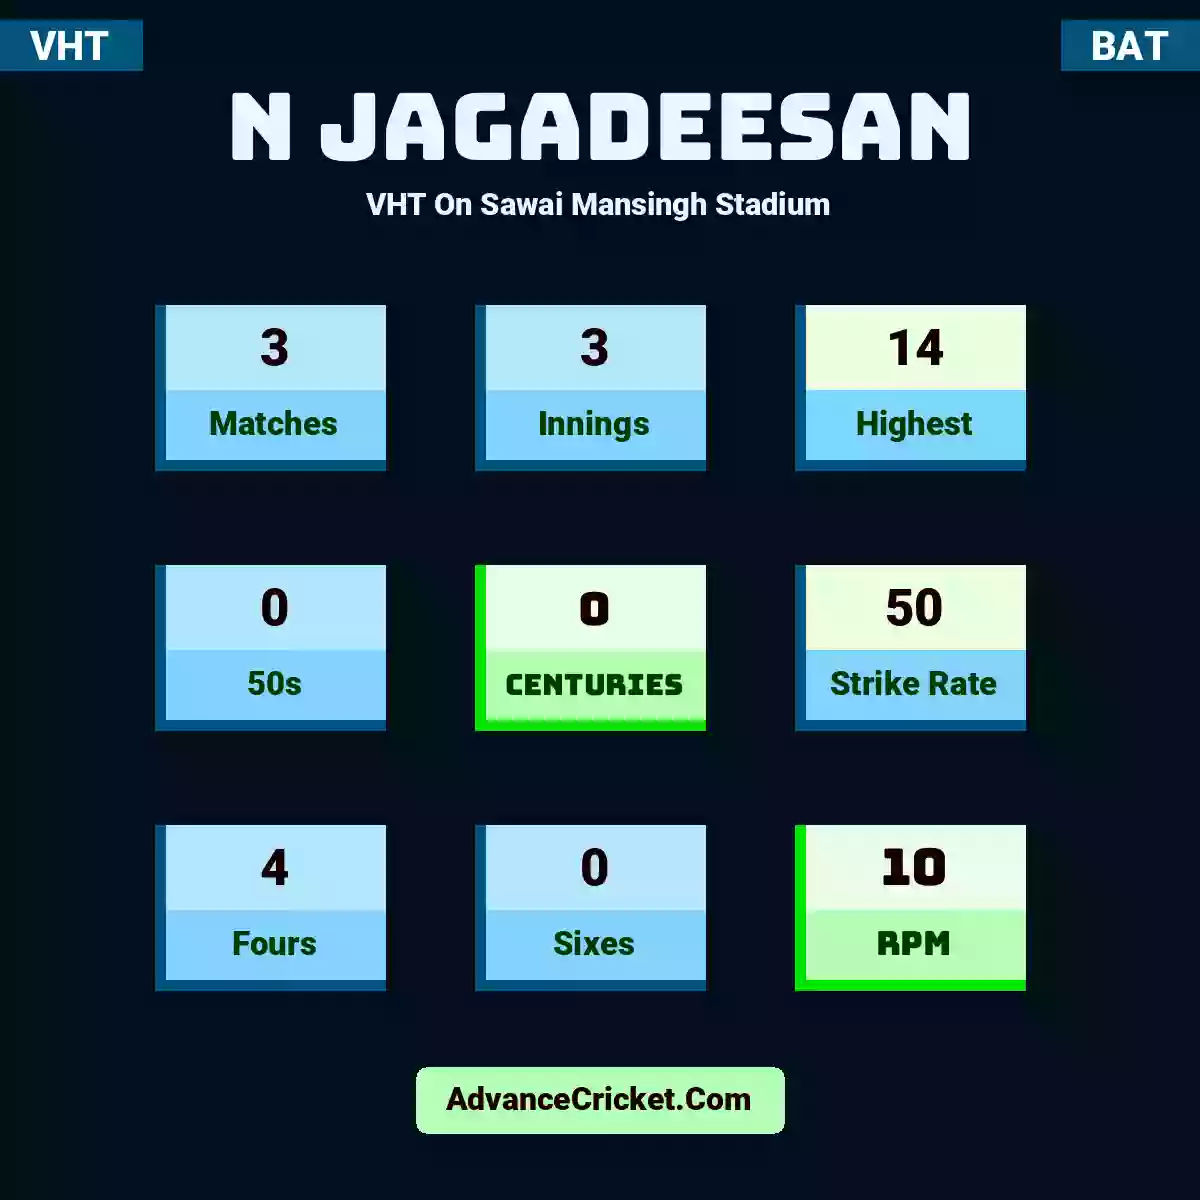 N Jagadeesan VHT  On Sawai Mansingh Stadium, N Jagadeesan played 3 matches, scored 14 runs as highest, 0 half-centuries, and 0 centuries, with a strike rate of 50. N.Jagadeesan hit 4 fours and 0 sixes, with an RPM of 10.